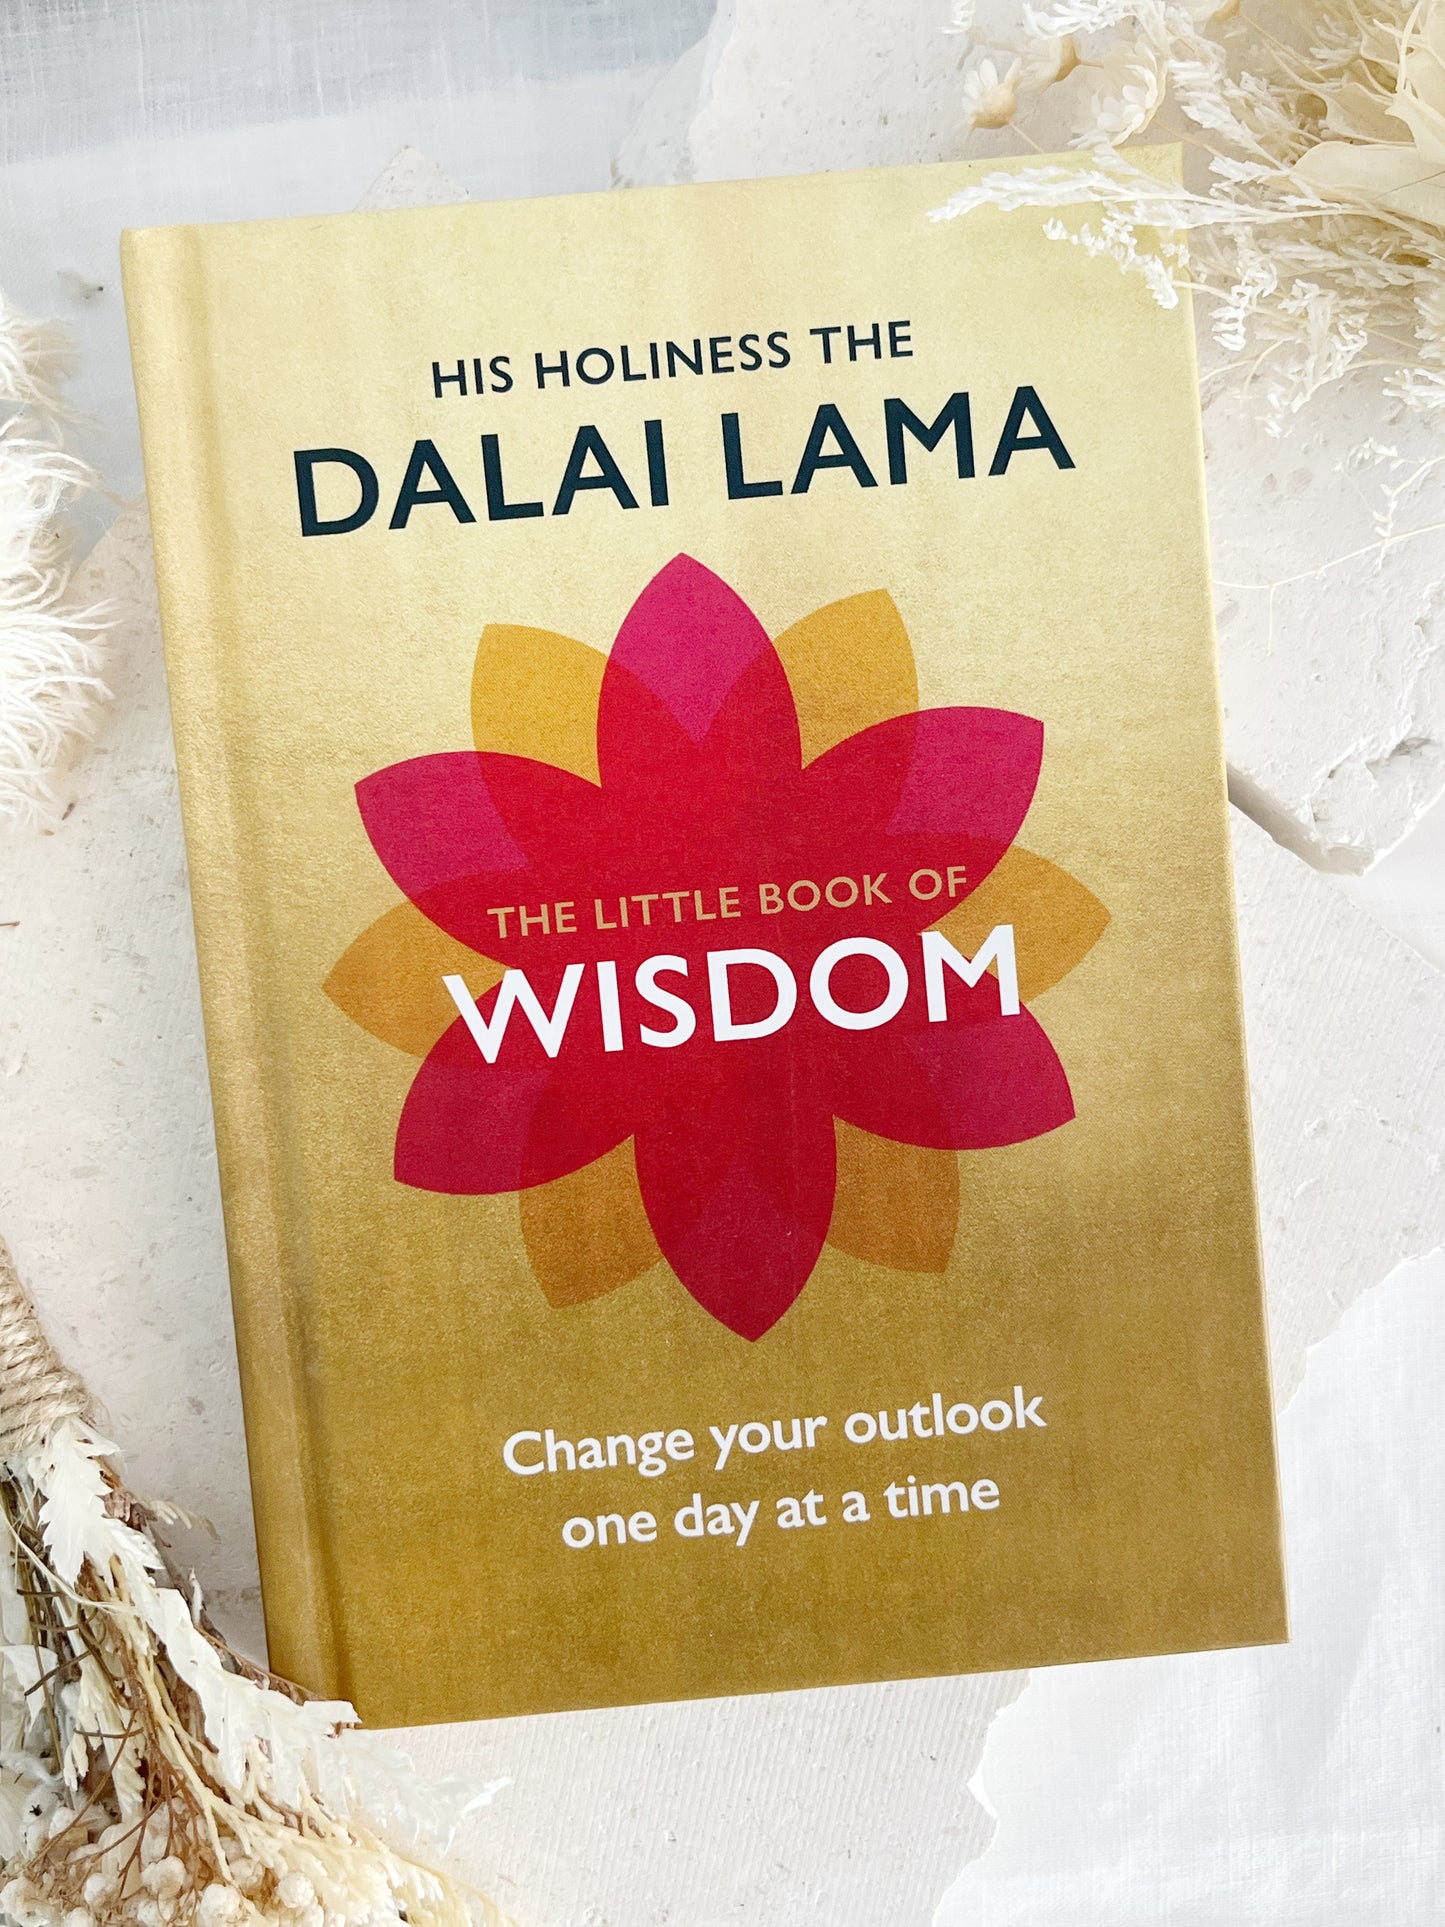 THE LITTLE BOOK OF WISDOM | DALAI LAMA